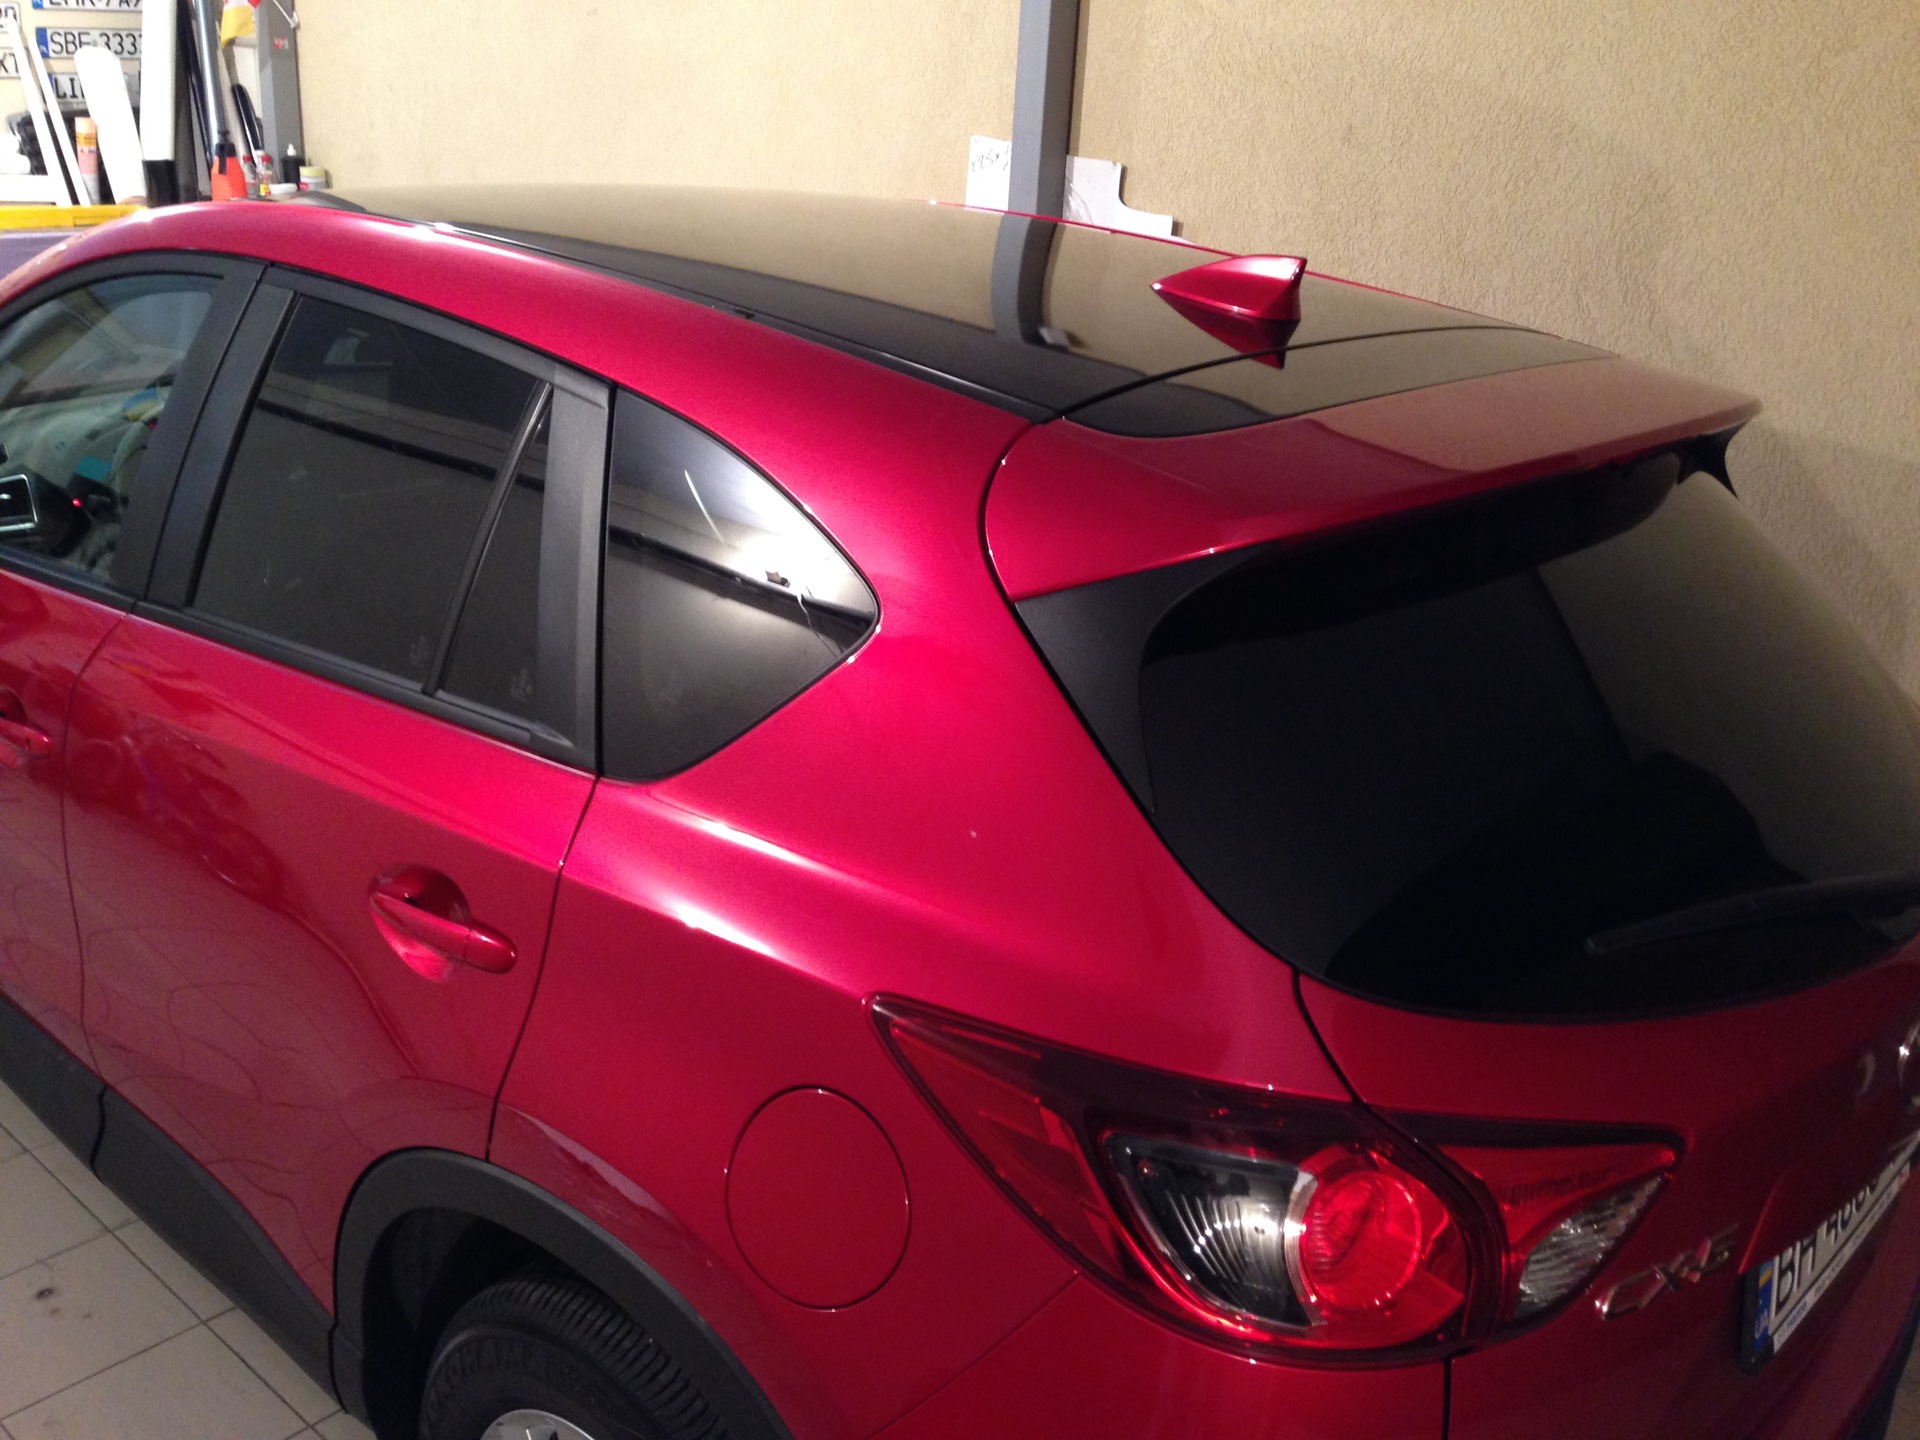 Мазда сх5 крыша. Mazda CX 5 С черной крышей. Mazda cx5 красная с черной крышей. Тонированная красная Mazda CX-5. Мазда СХ-5 С панорамной крышей.